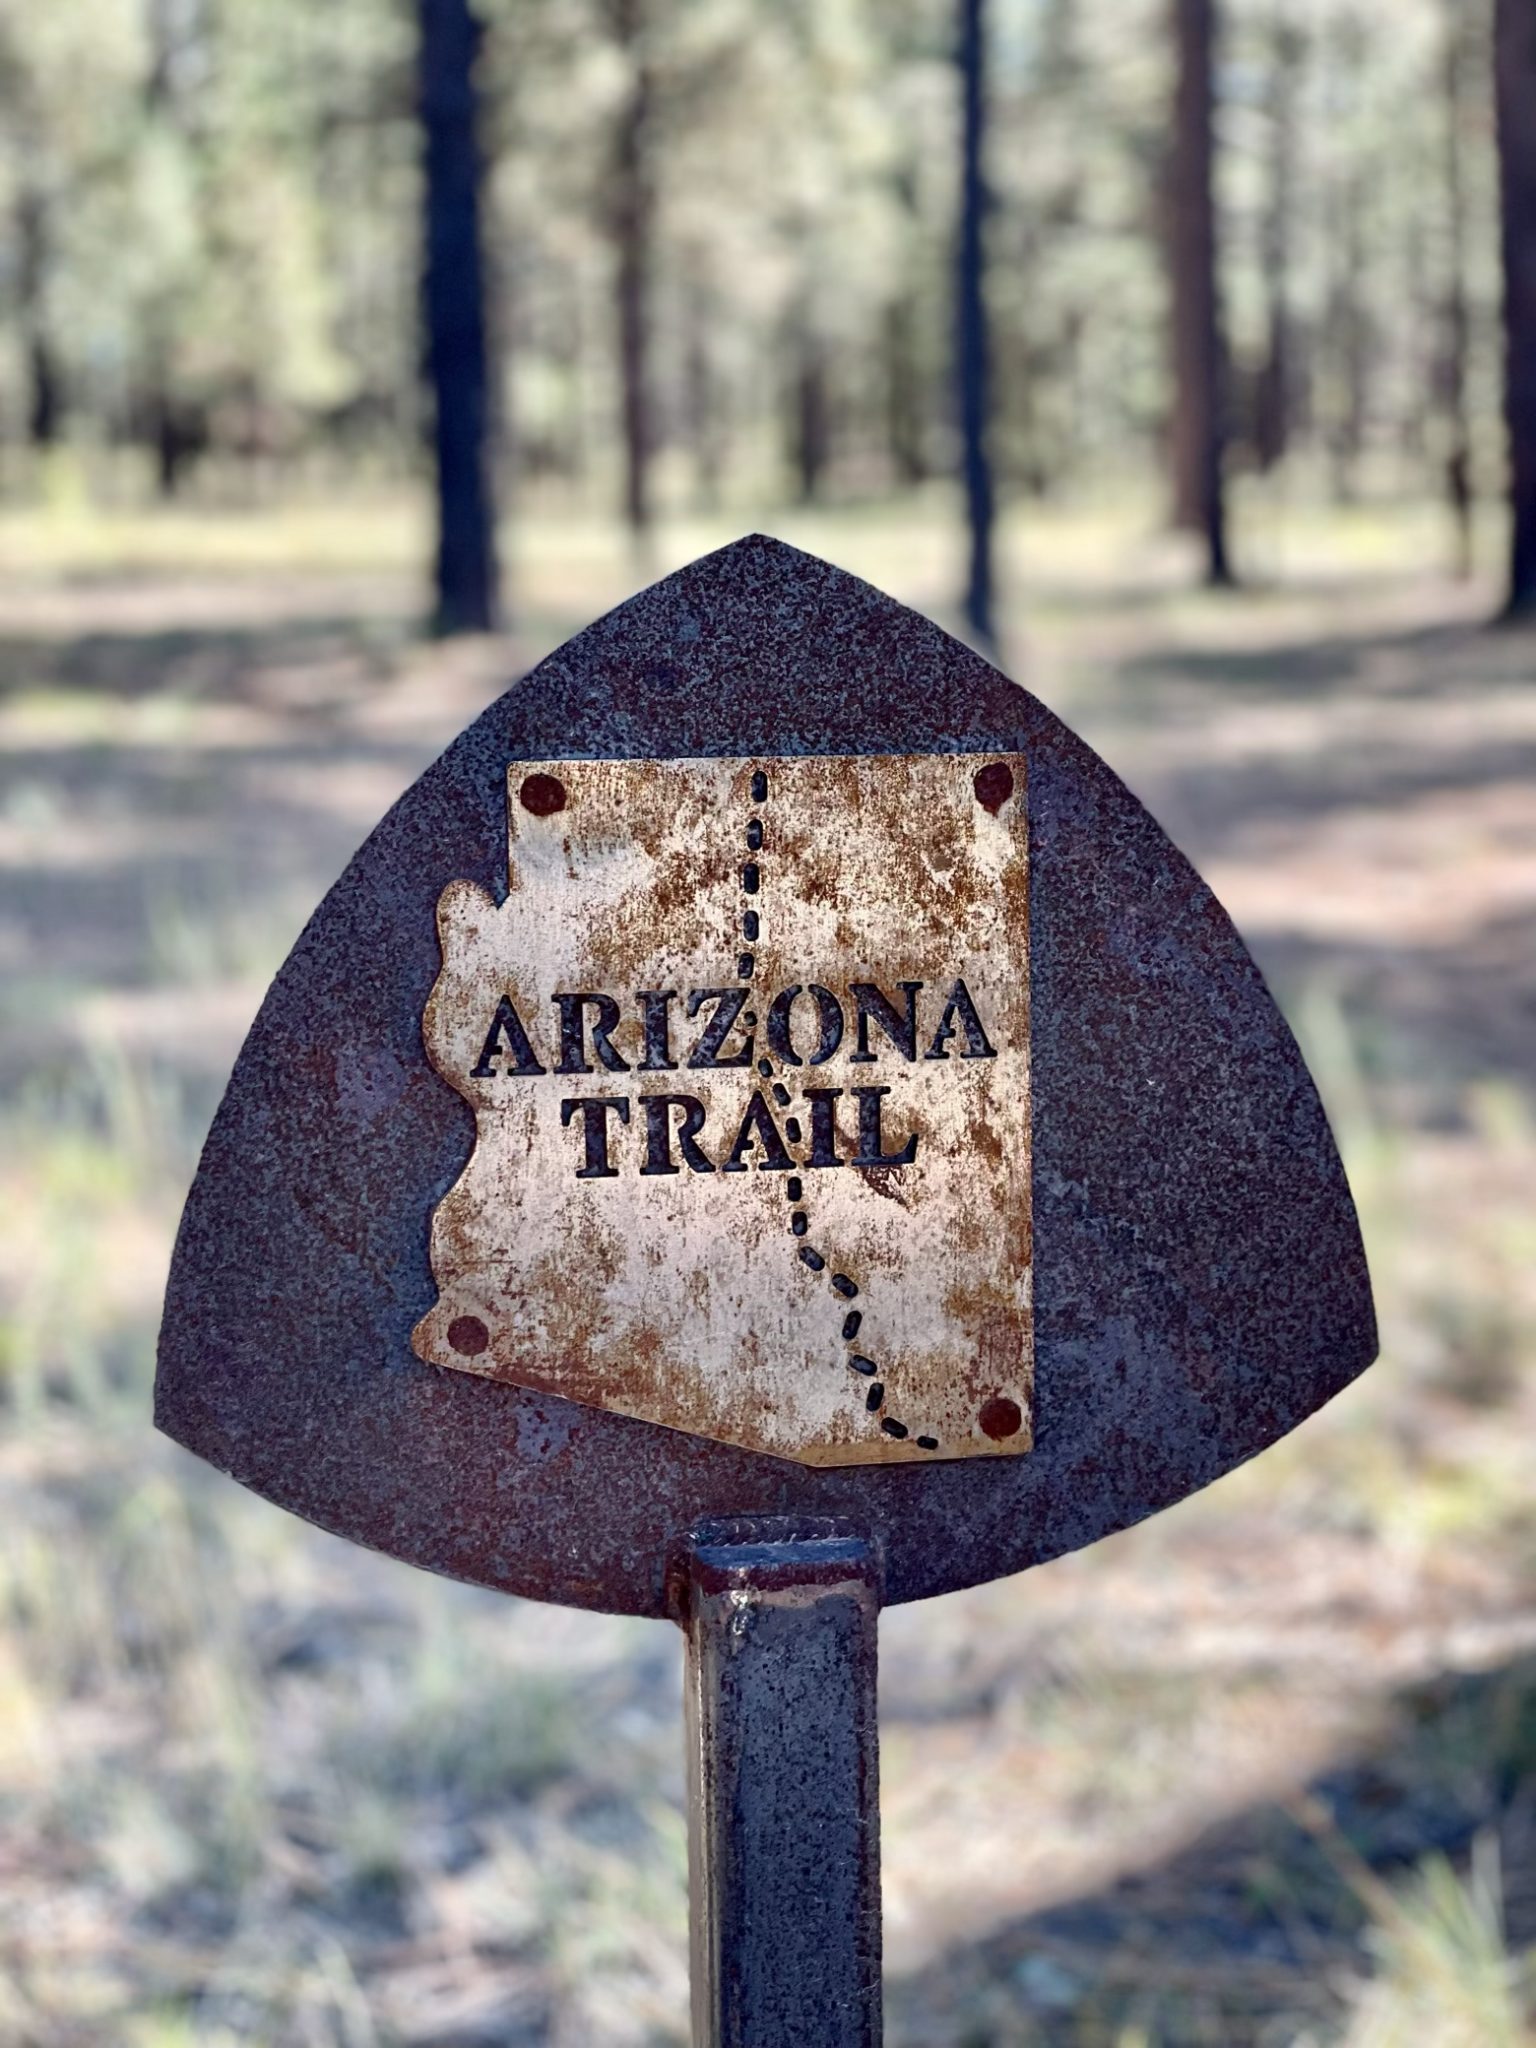 Prize-winning trail sign styling